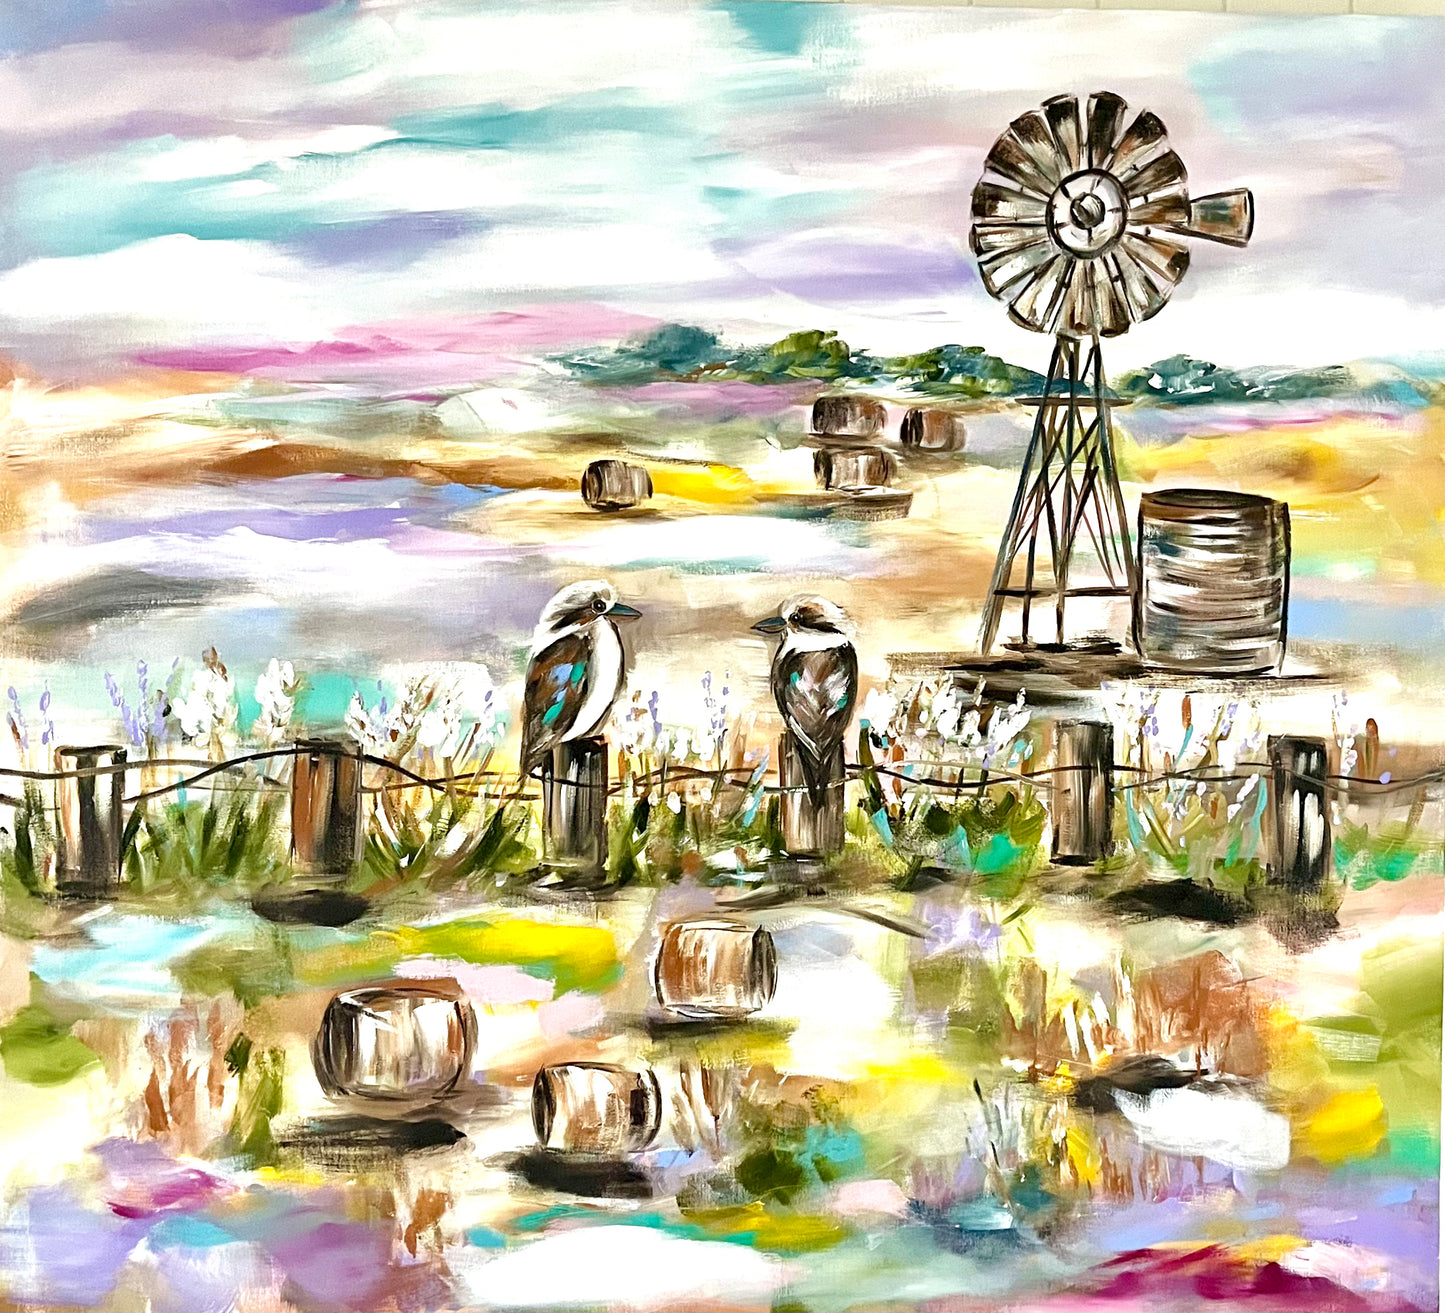 A1 - Whispers of the Windmill: Kookaburras at Dawn"